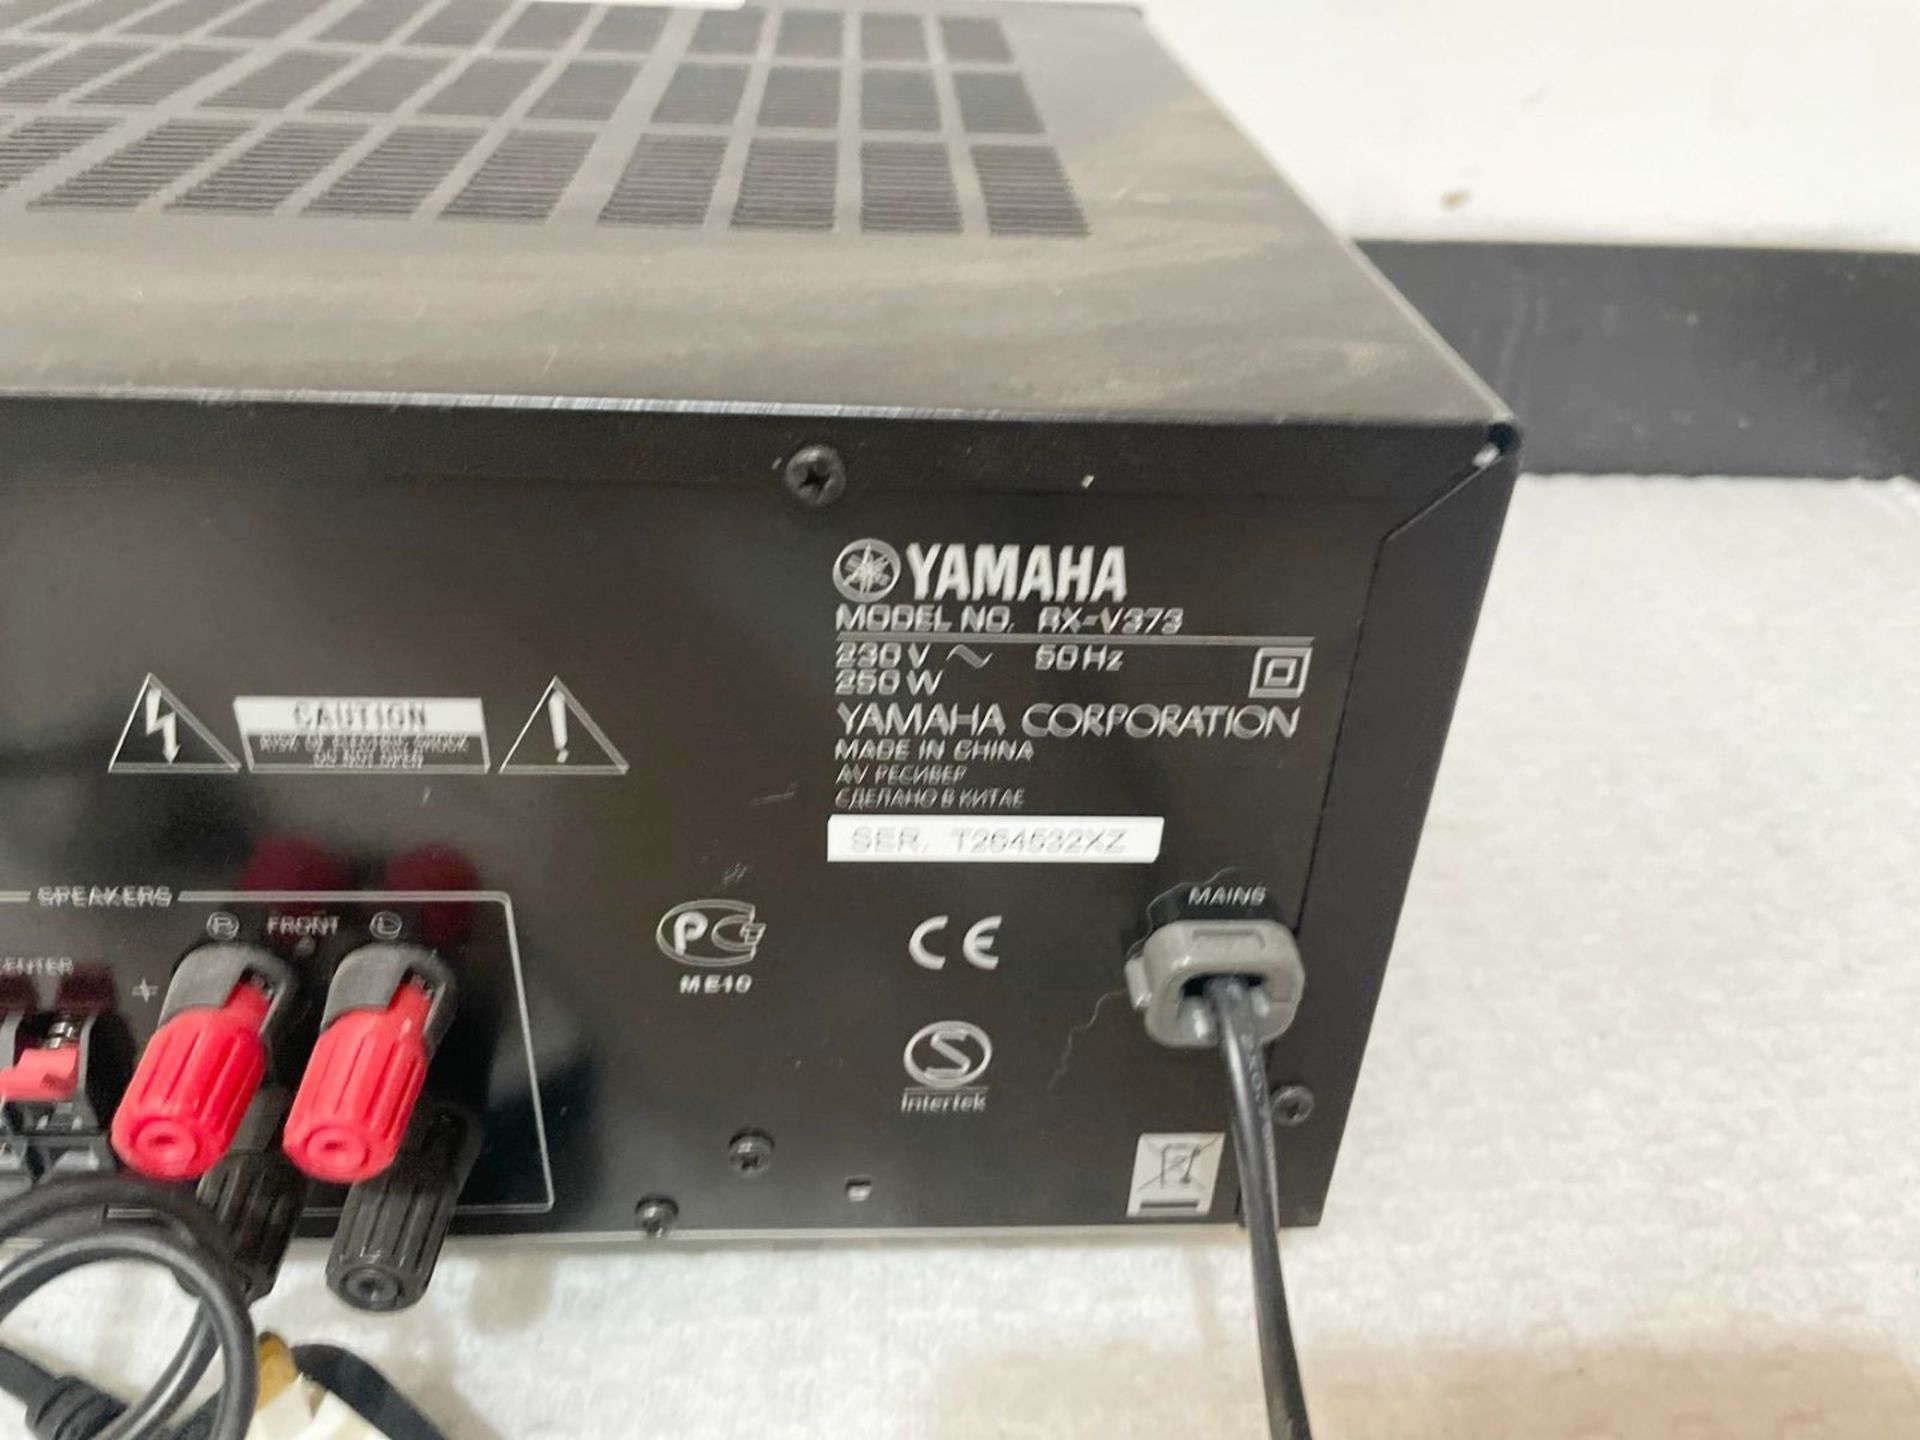 1 x Yamaha Natural Sound AV Reciever - Model RX-V3673 - Cinema DSP Digital - Original RRP: £700.00 - - Image 7 of 7